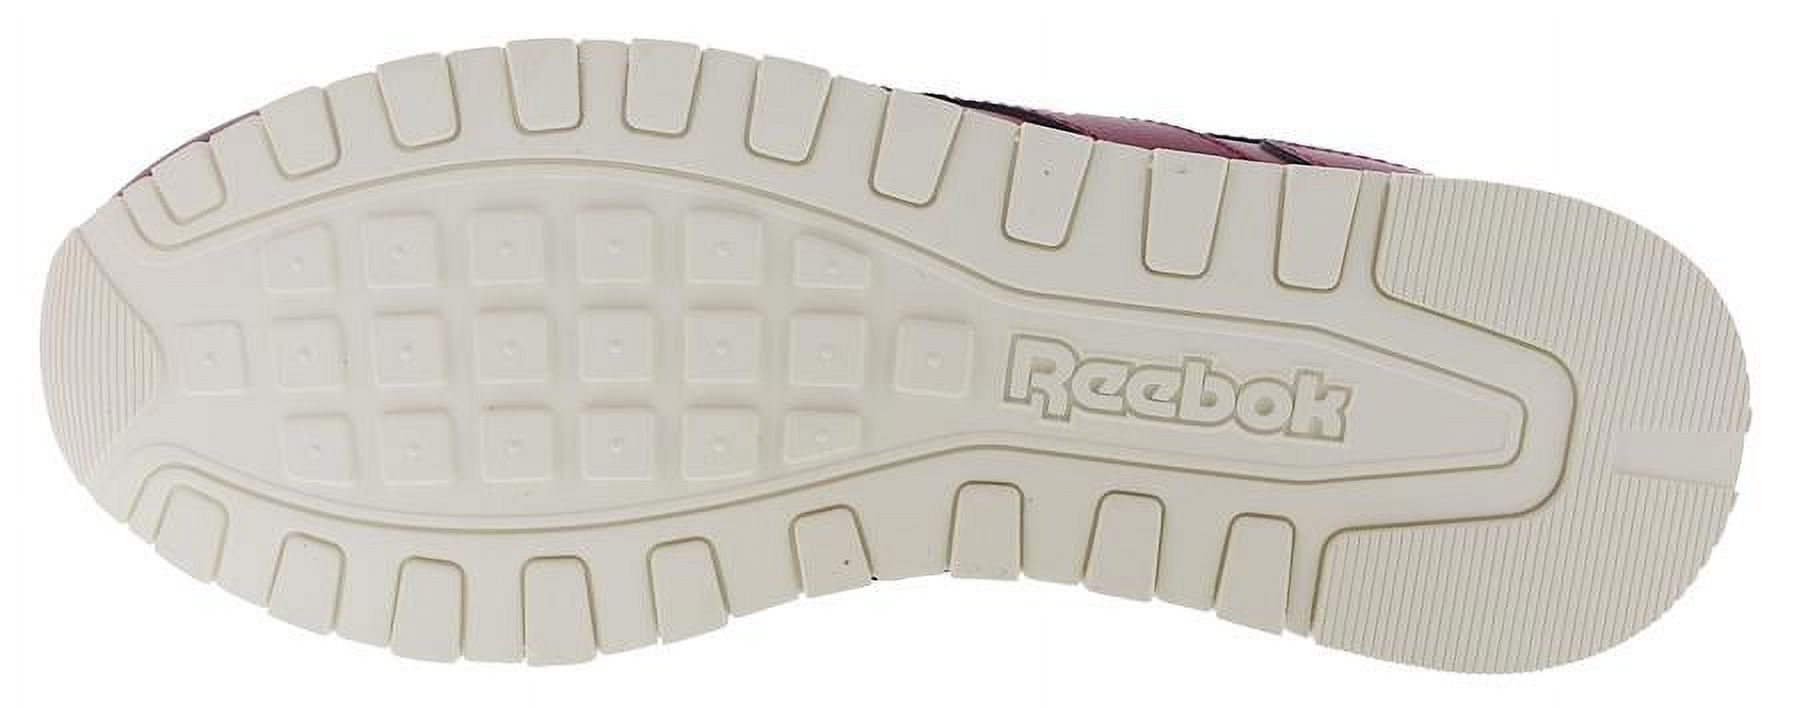 Reebok Men's Classic Harman Run Classic Retro Walking Shoes - image 5 of 5